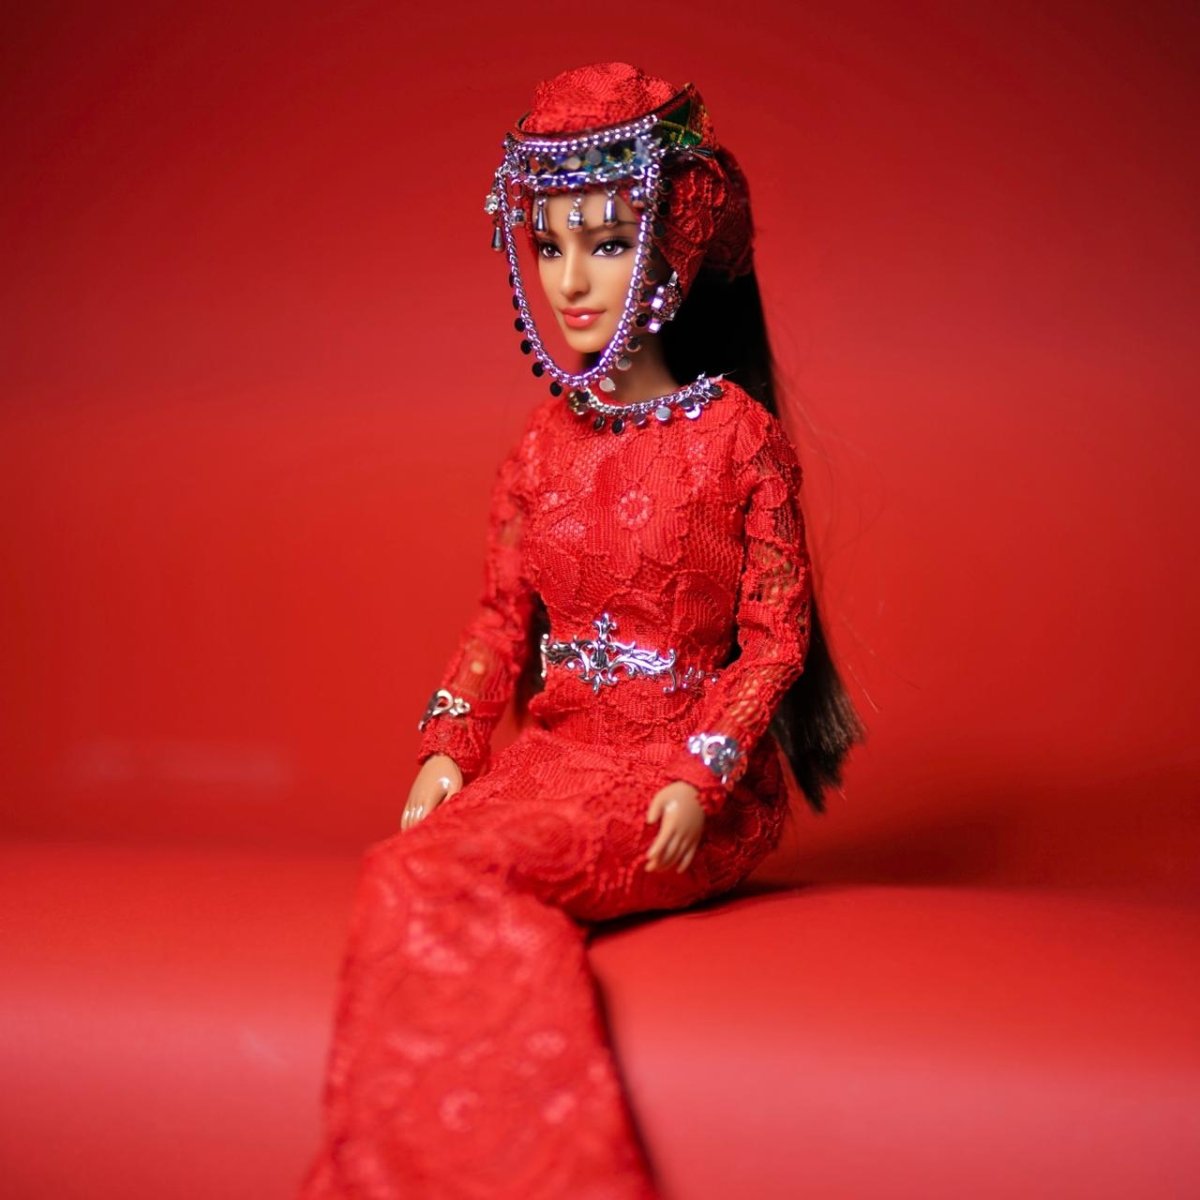 Armenian Doll "Sirusho" - Pregomesh